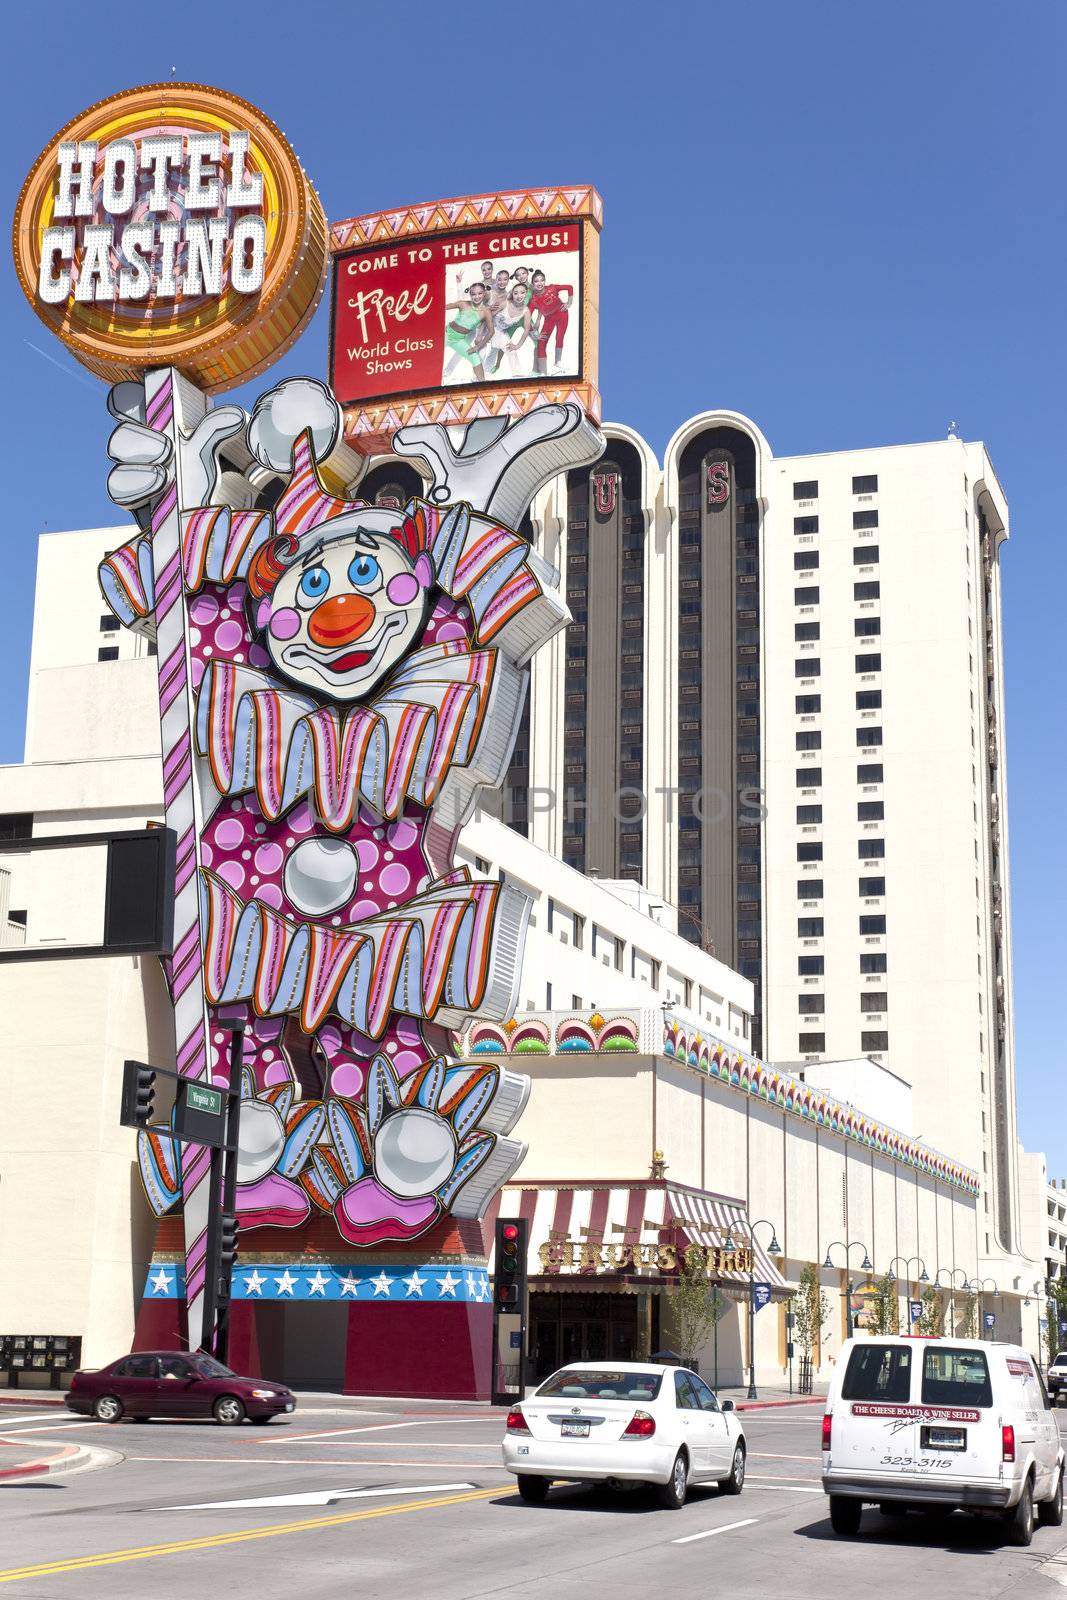 Circus circus casino hotel and entertainment, Reno Nevada.